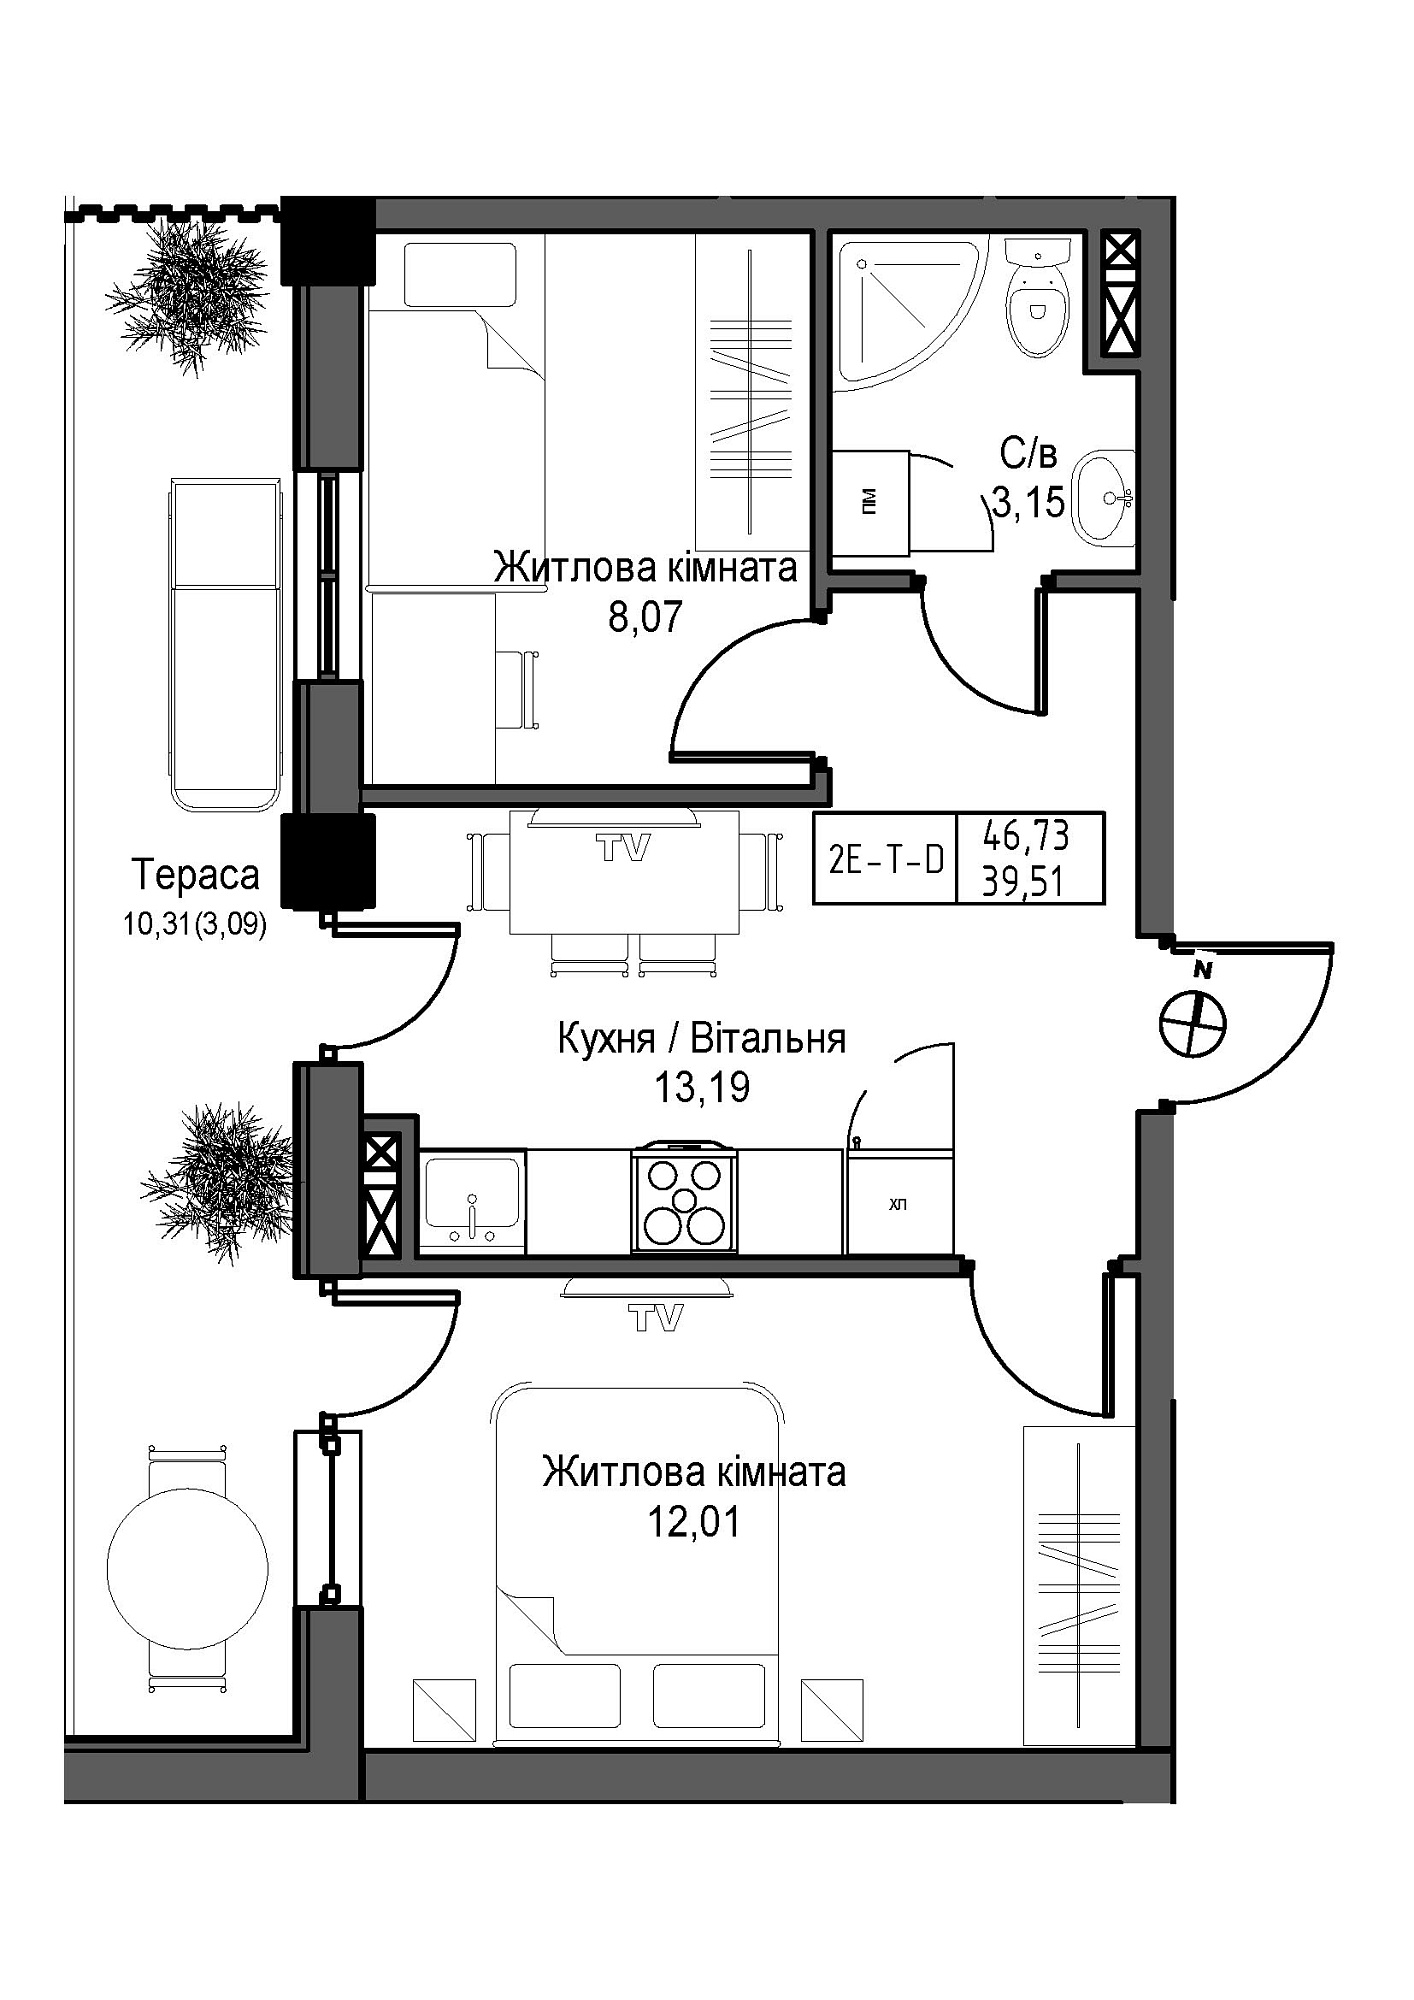 Planning 2-rm flats area 39.51m2, UM-007-12/0001.